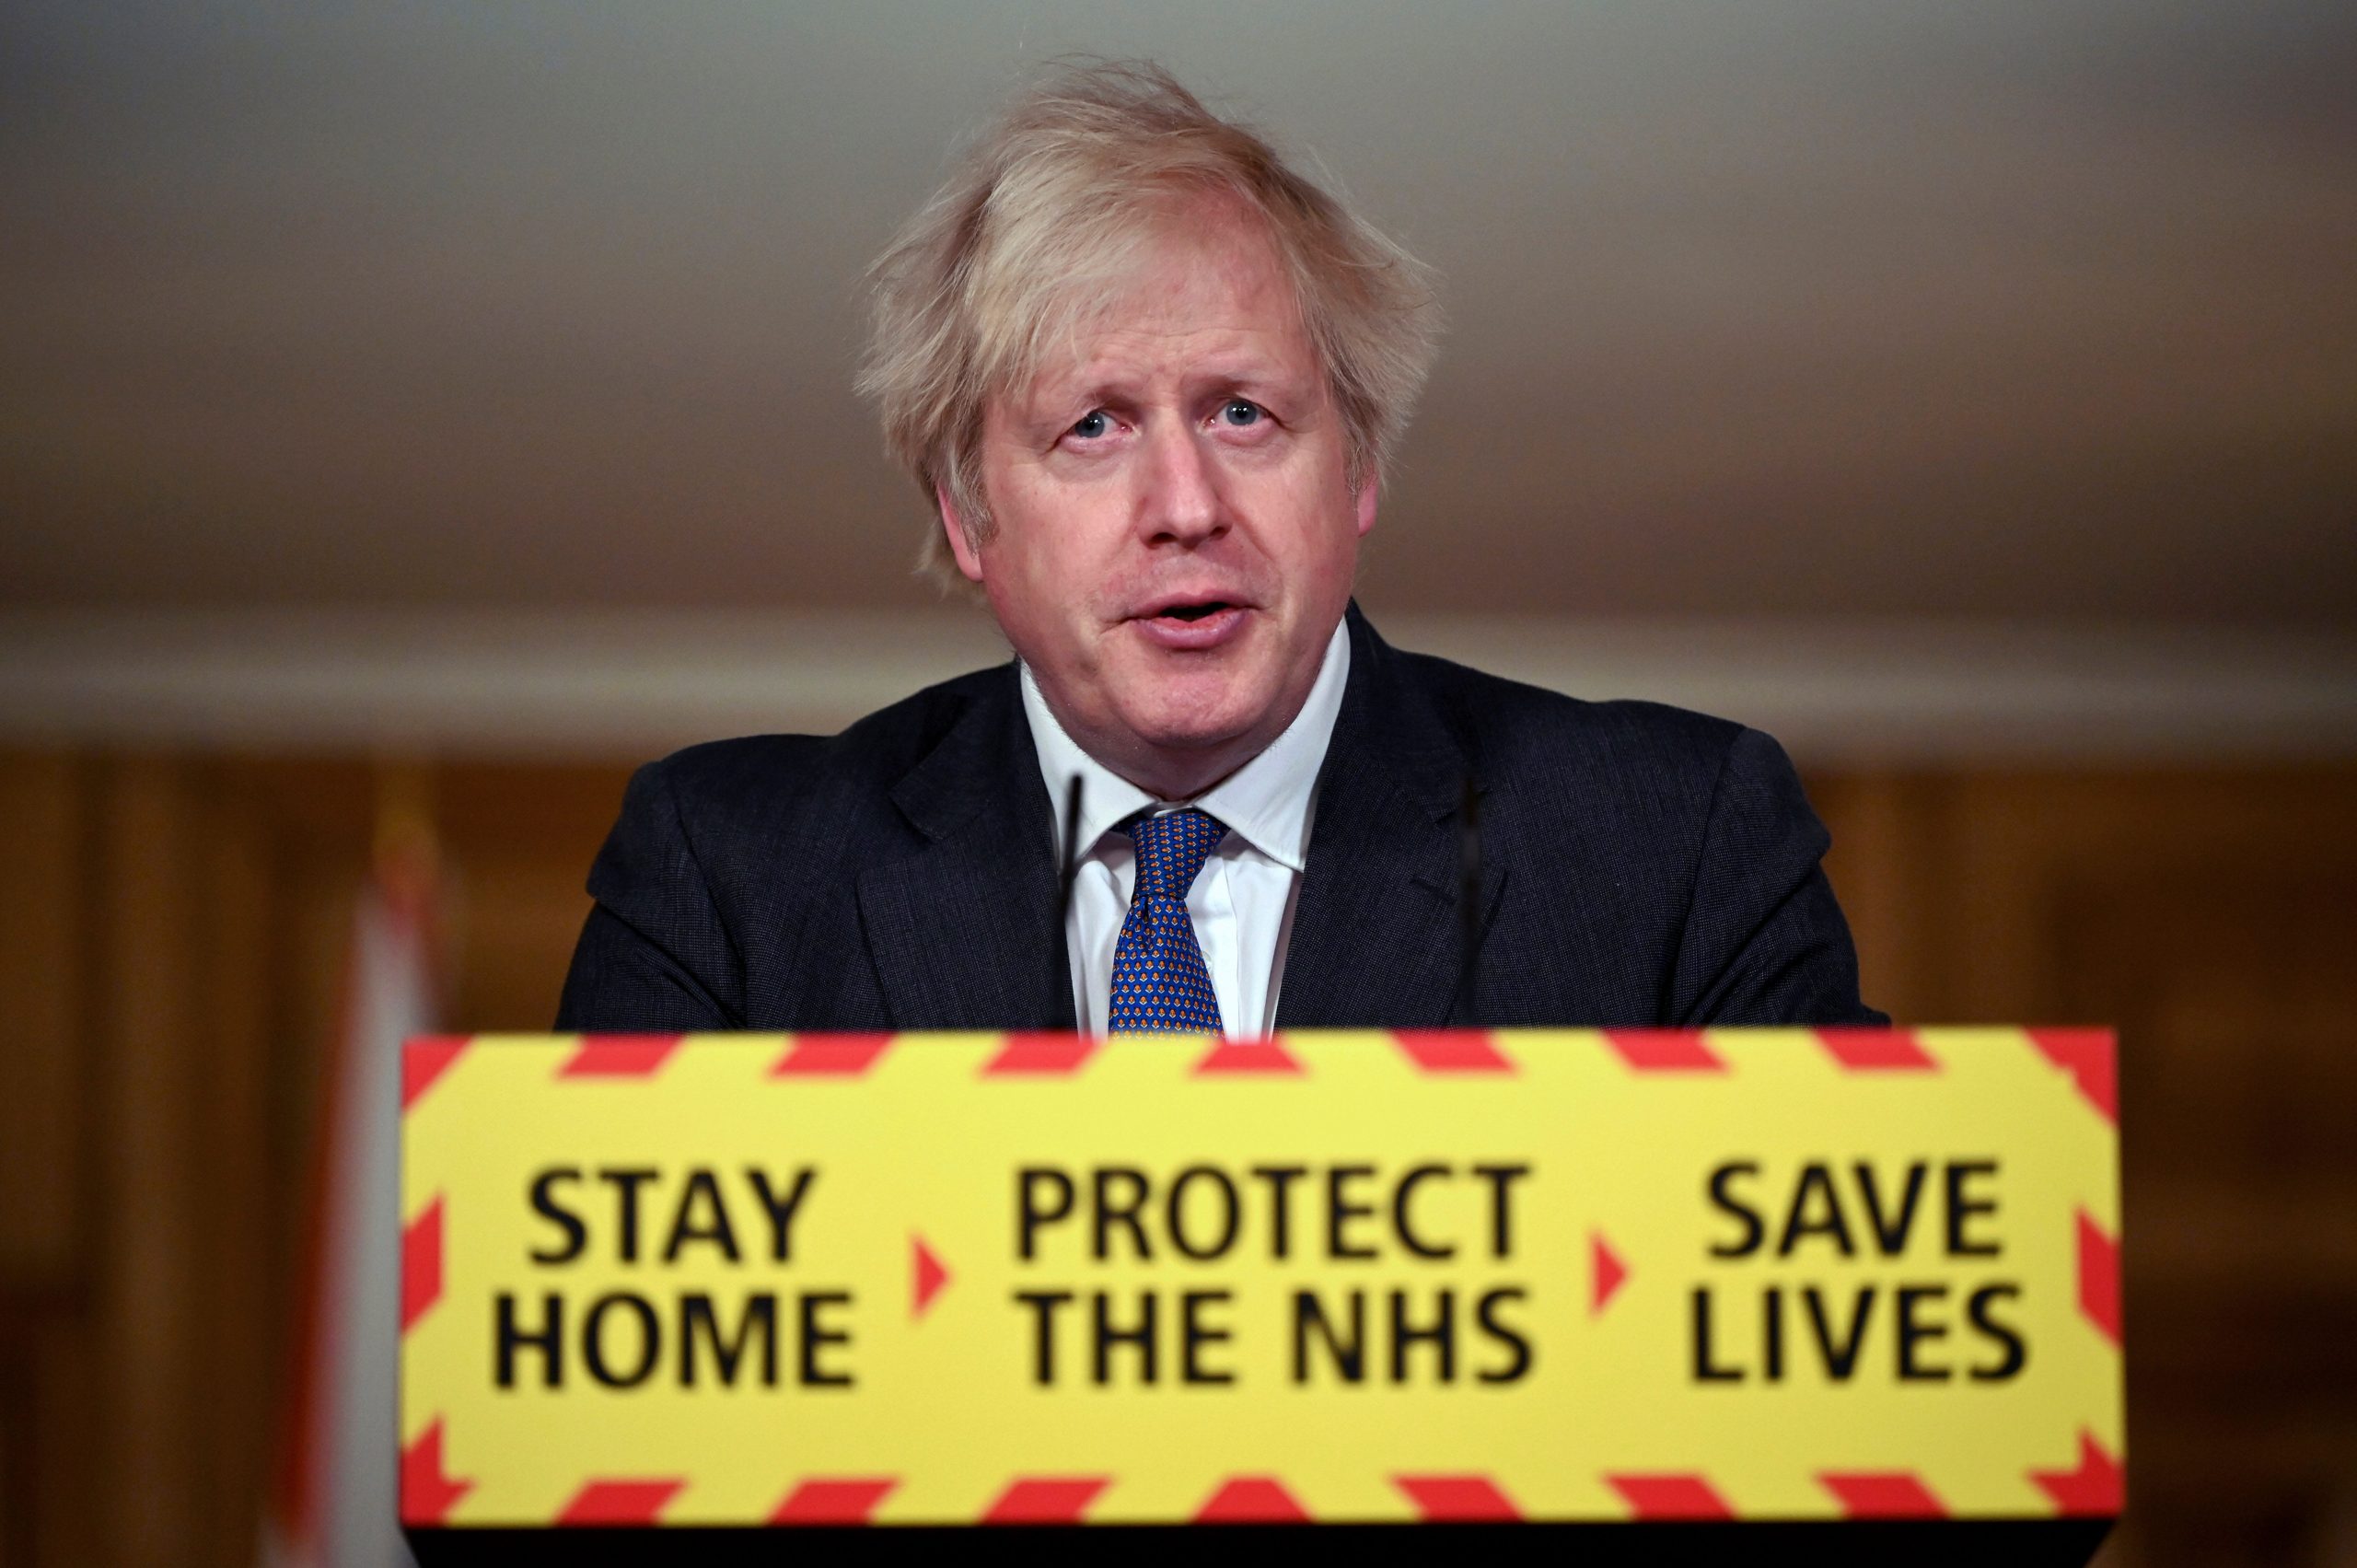 UK Prime Minister Boris Johnson cancels his India visit amid COVID-19 surge